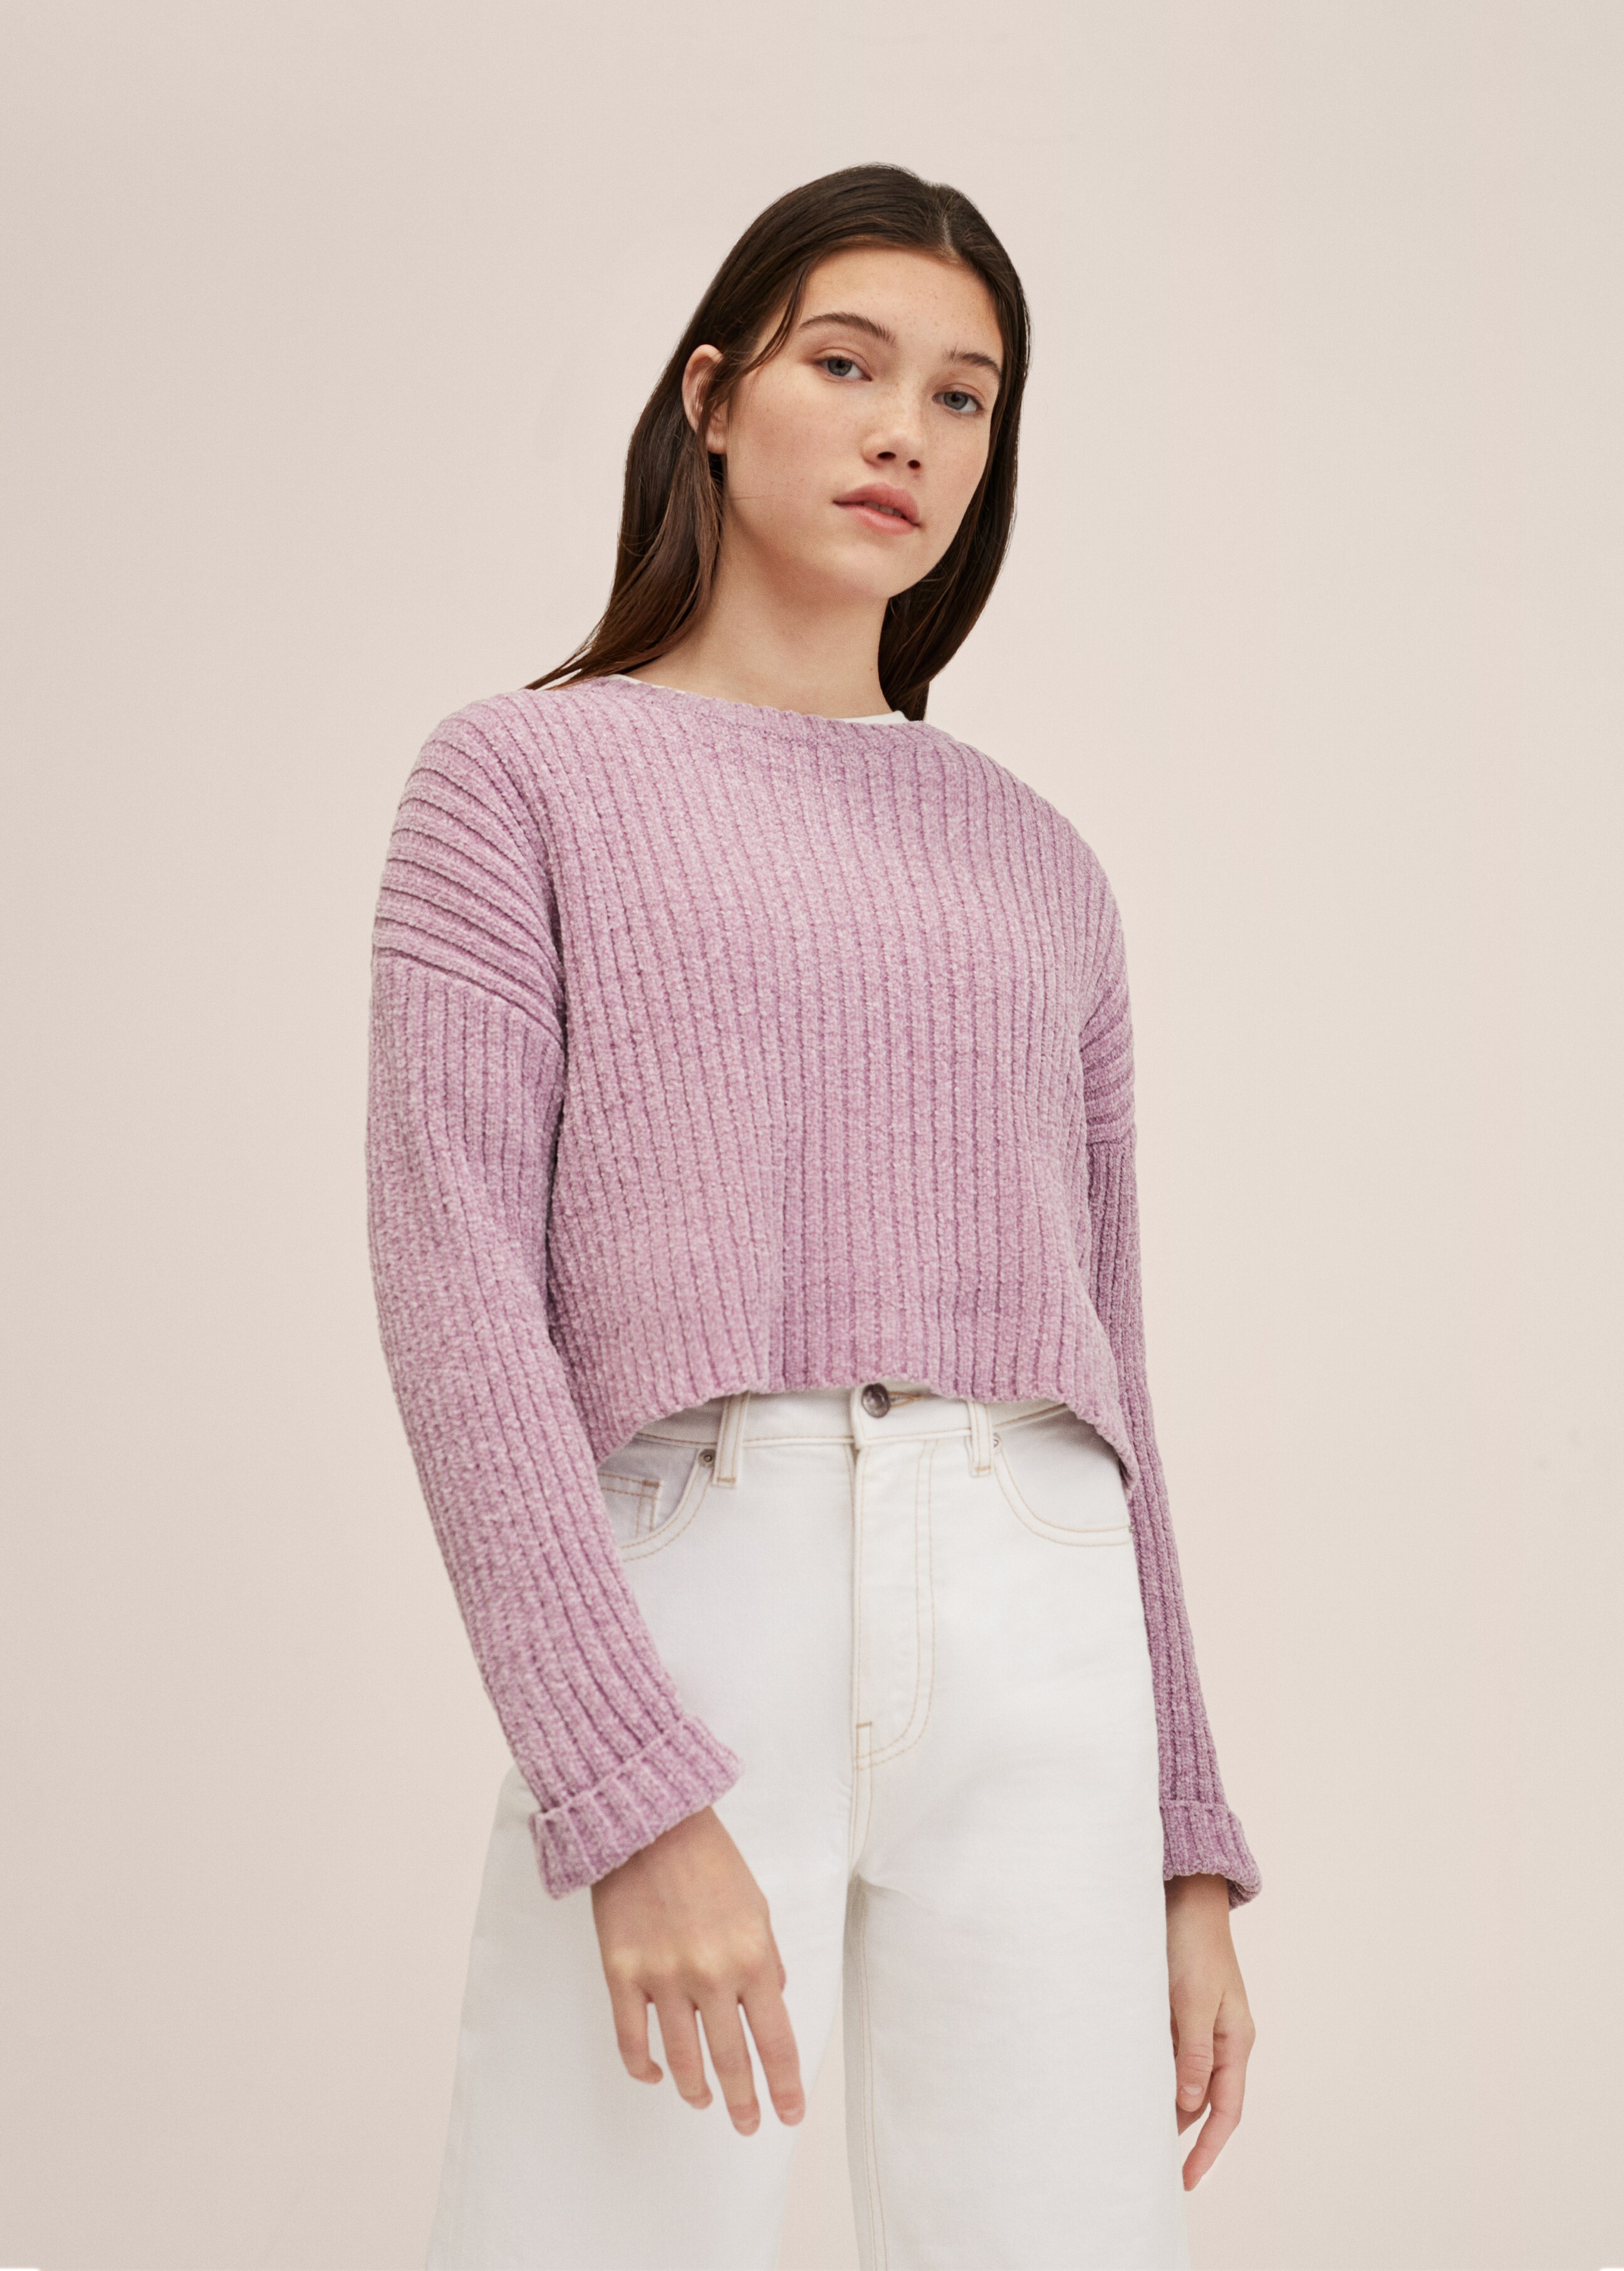 Chenille knit sweater - Medium plane